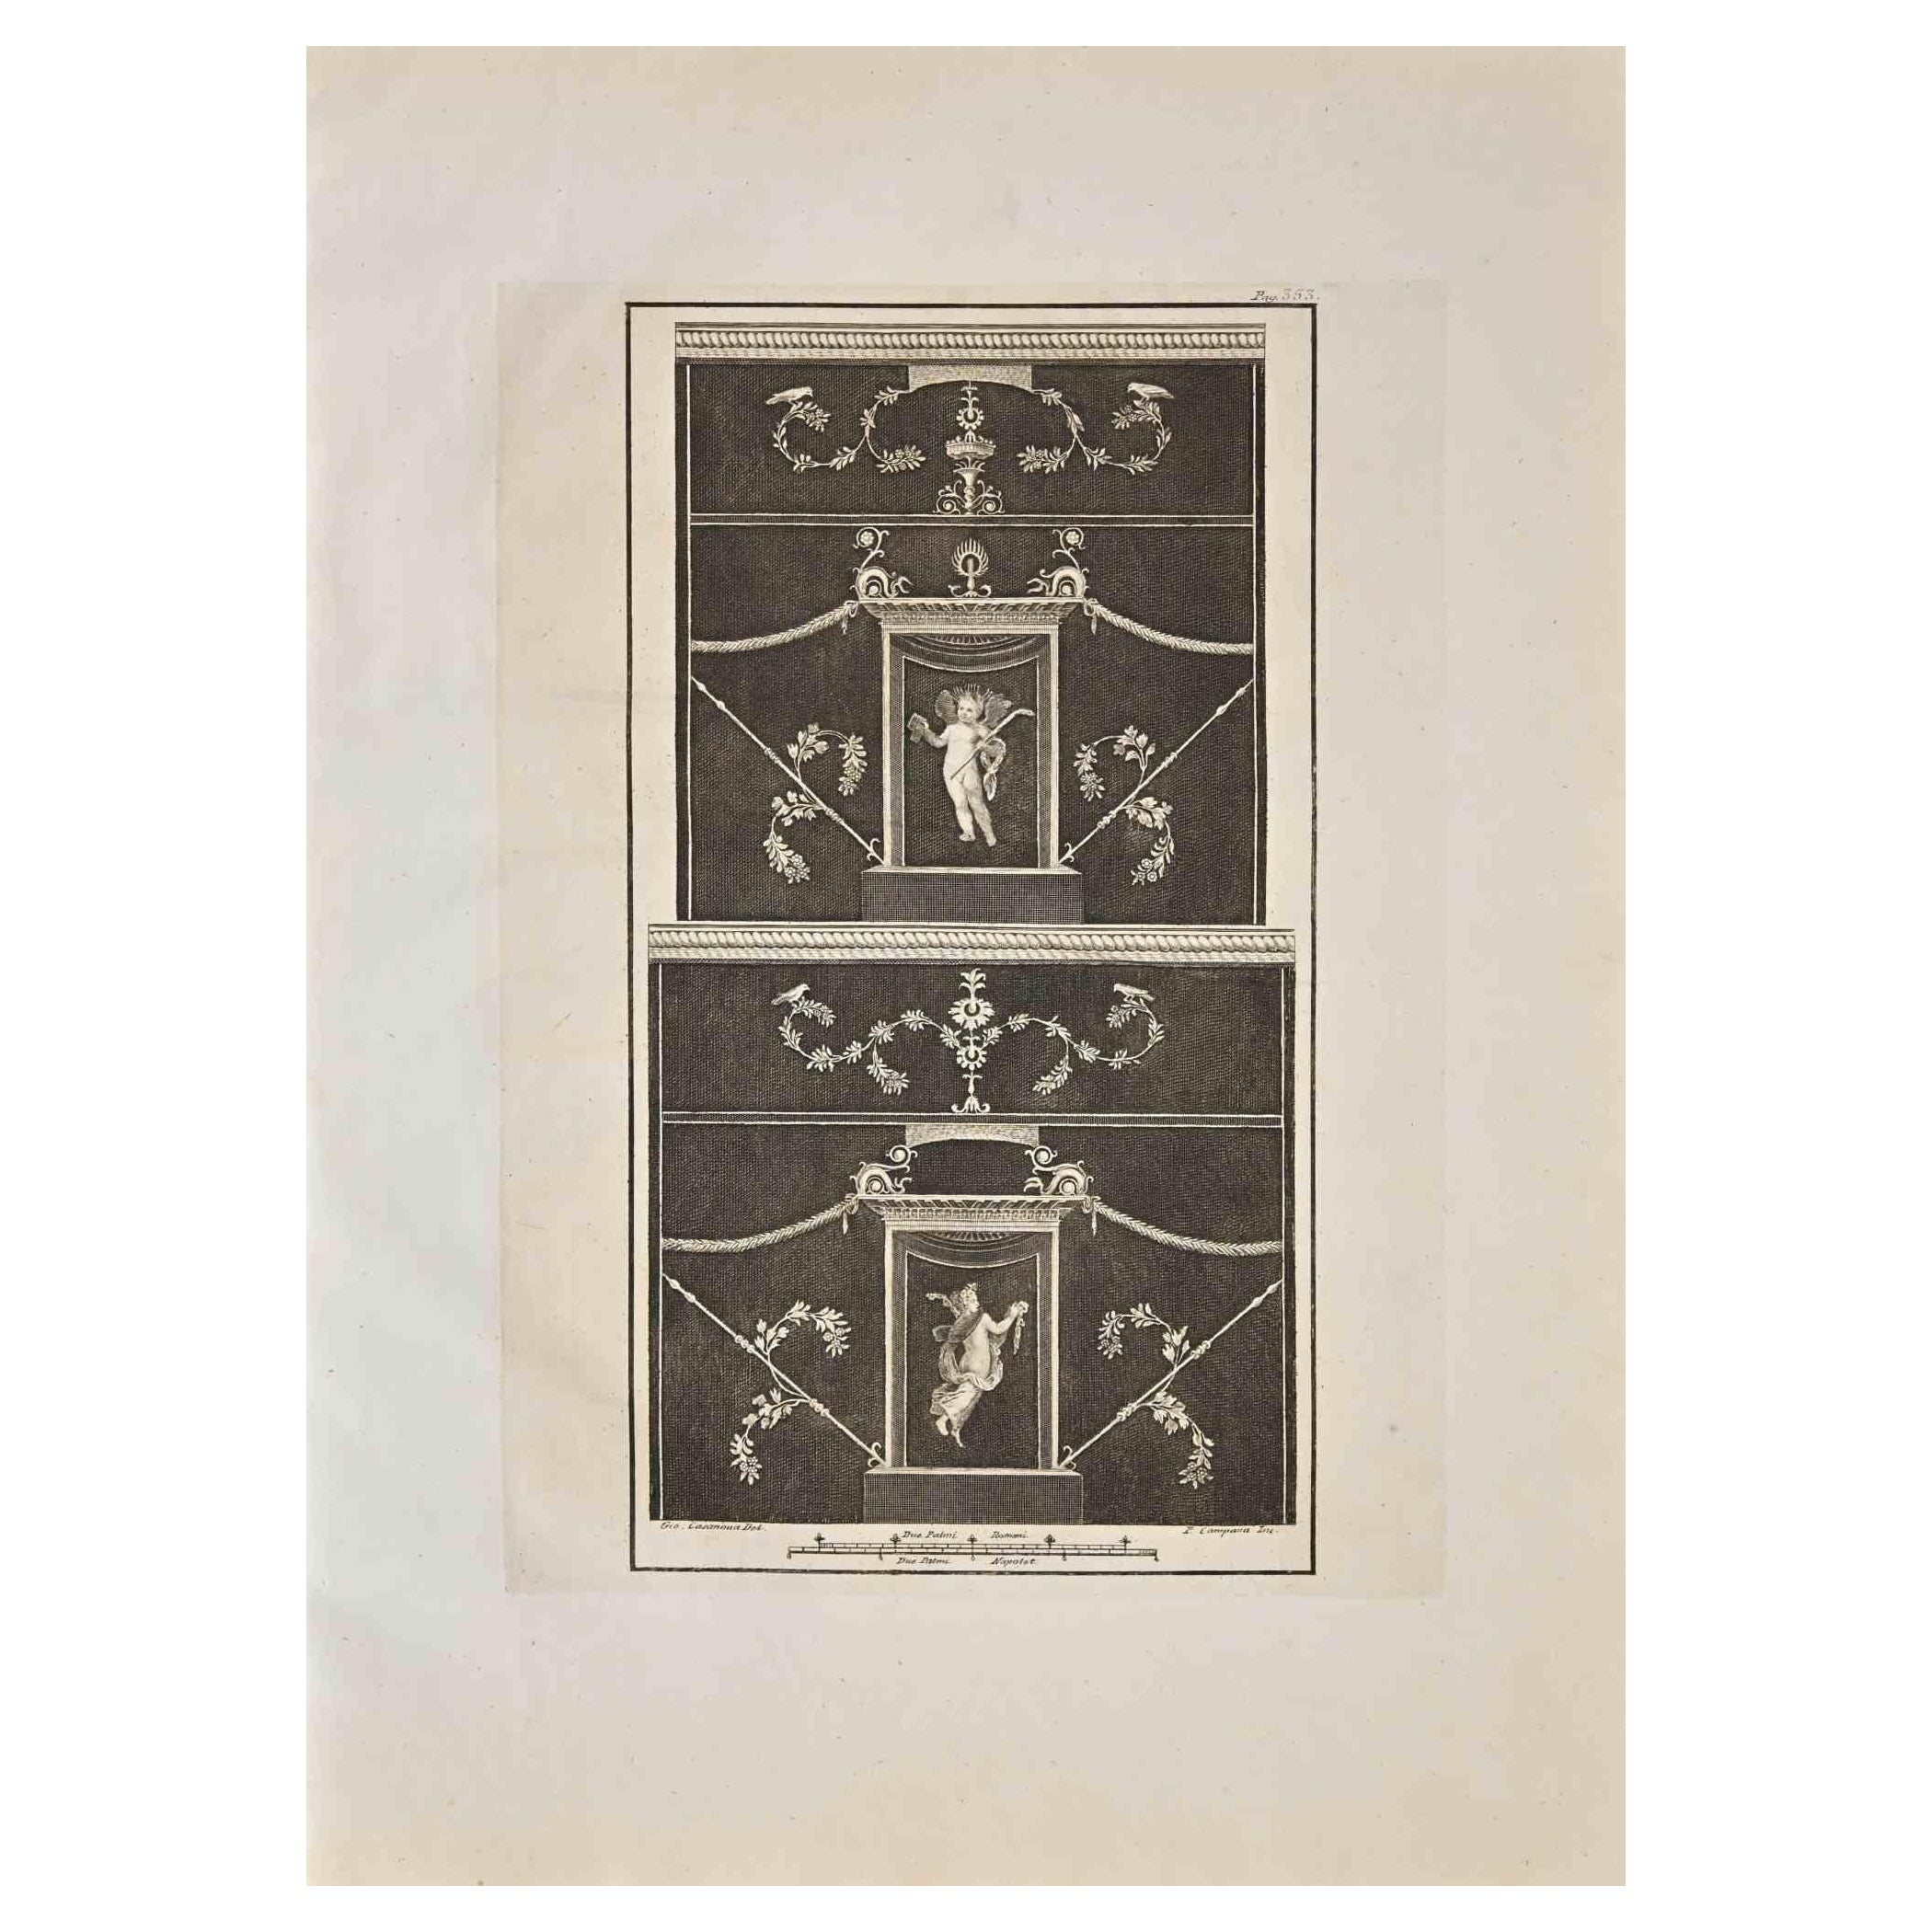 Pietro Campana Figurative Print - Ancient Roman Fresco Herculaneum -  Etching P. Campana - 18th Century